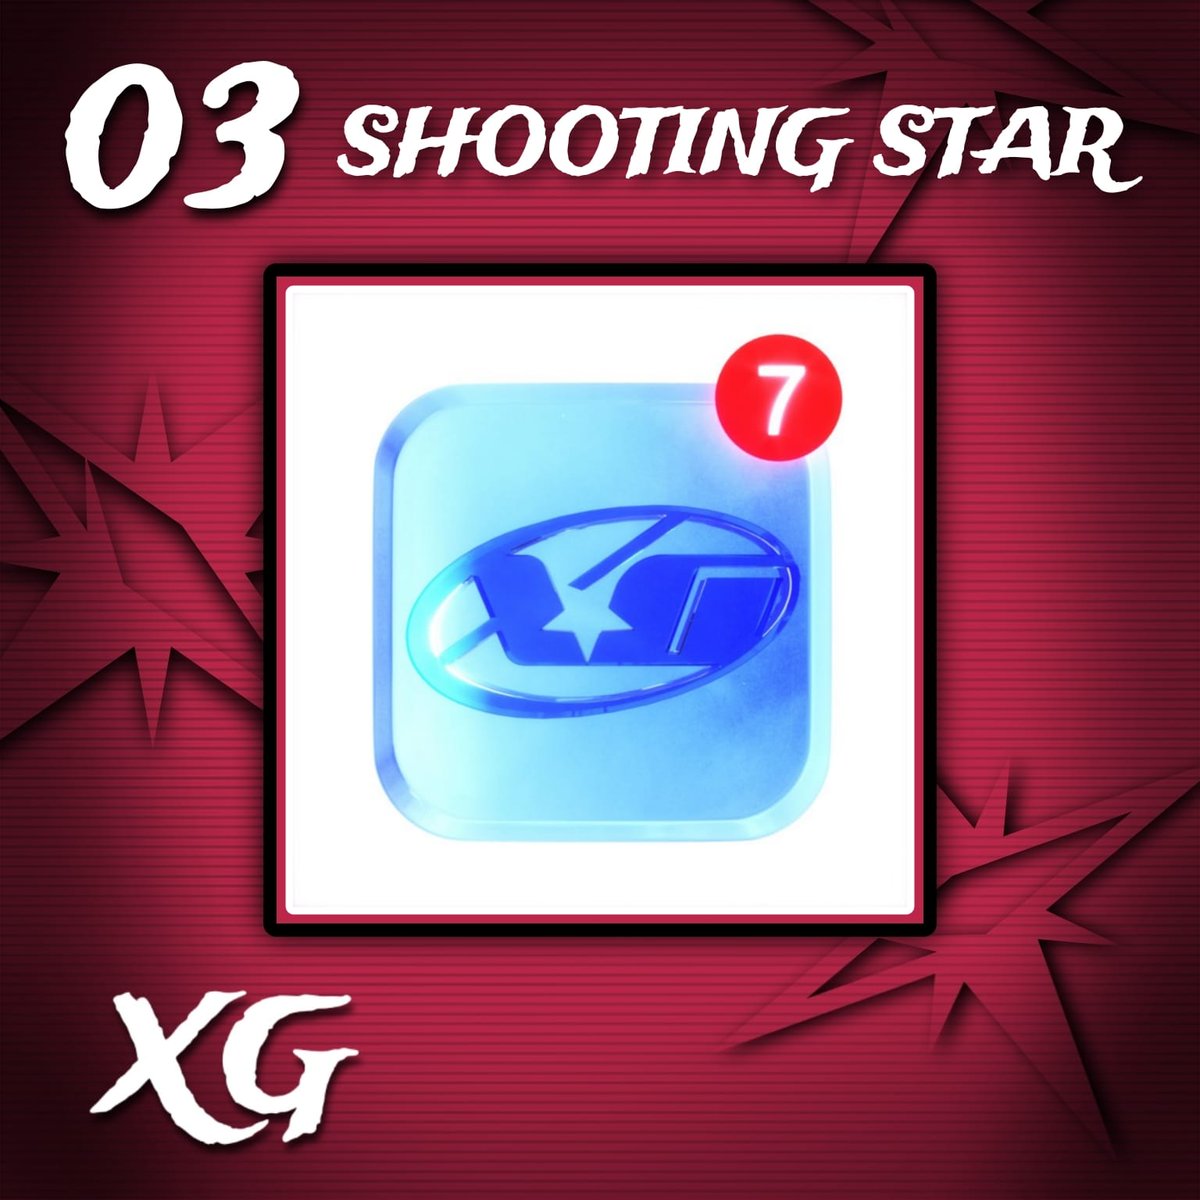 04. bad idea right? - Olivia Rodrigo
⇕
03. SHOOTING STAR - XG 🥉

#badidearight #OliviaRodrigo #SHOOTINGSTAR #XG